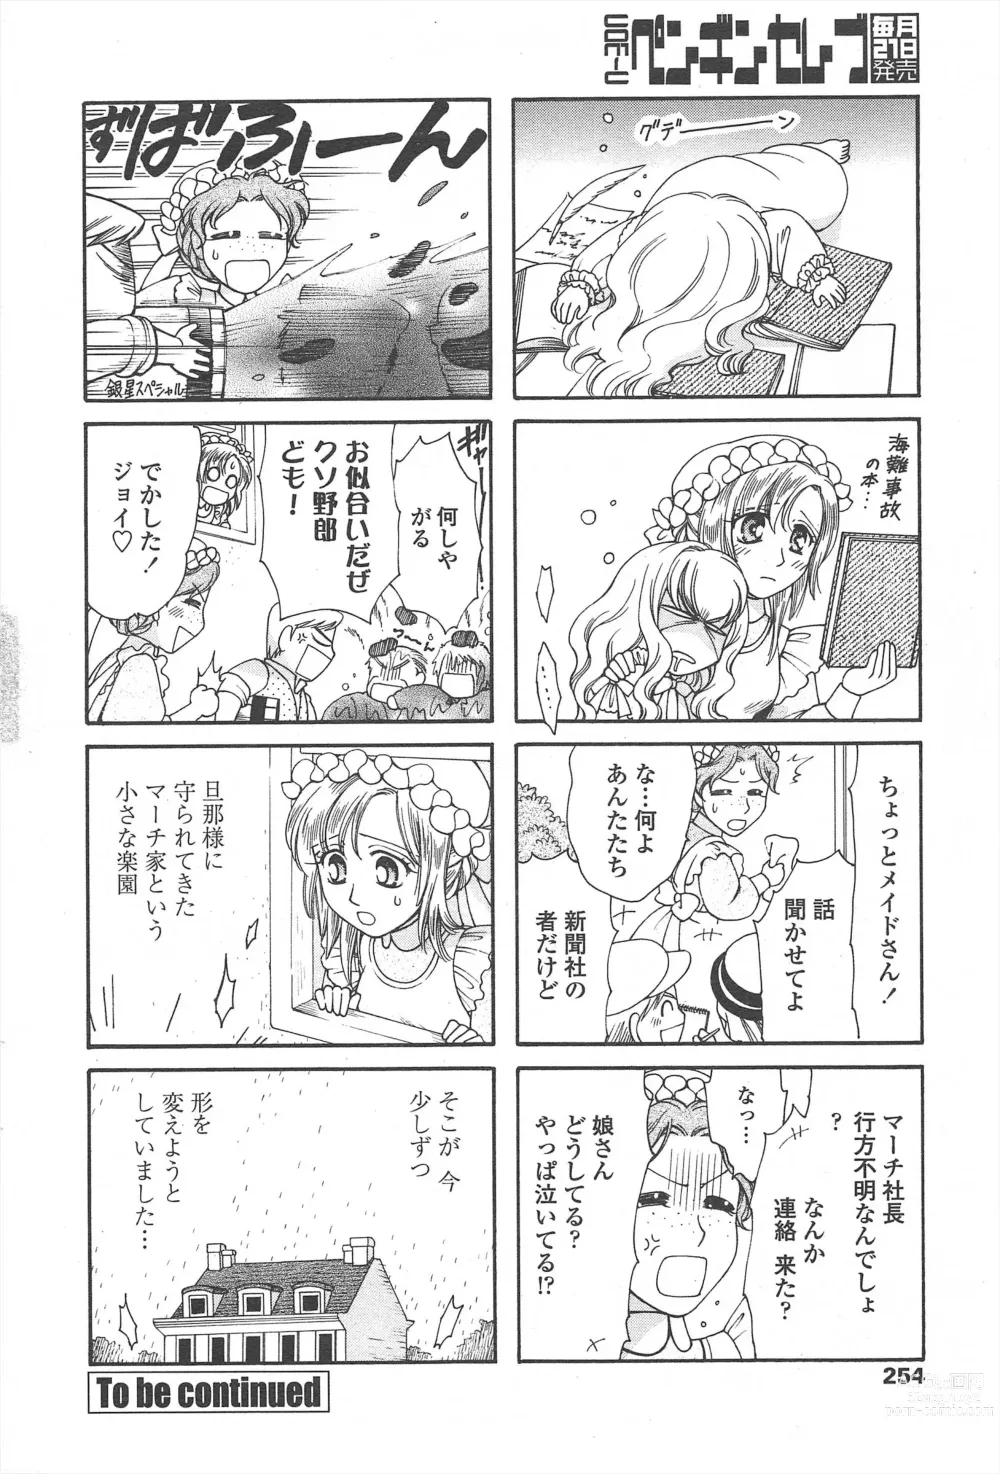 Page 256 of manga COMIC Penguin Celeb 2010-12